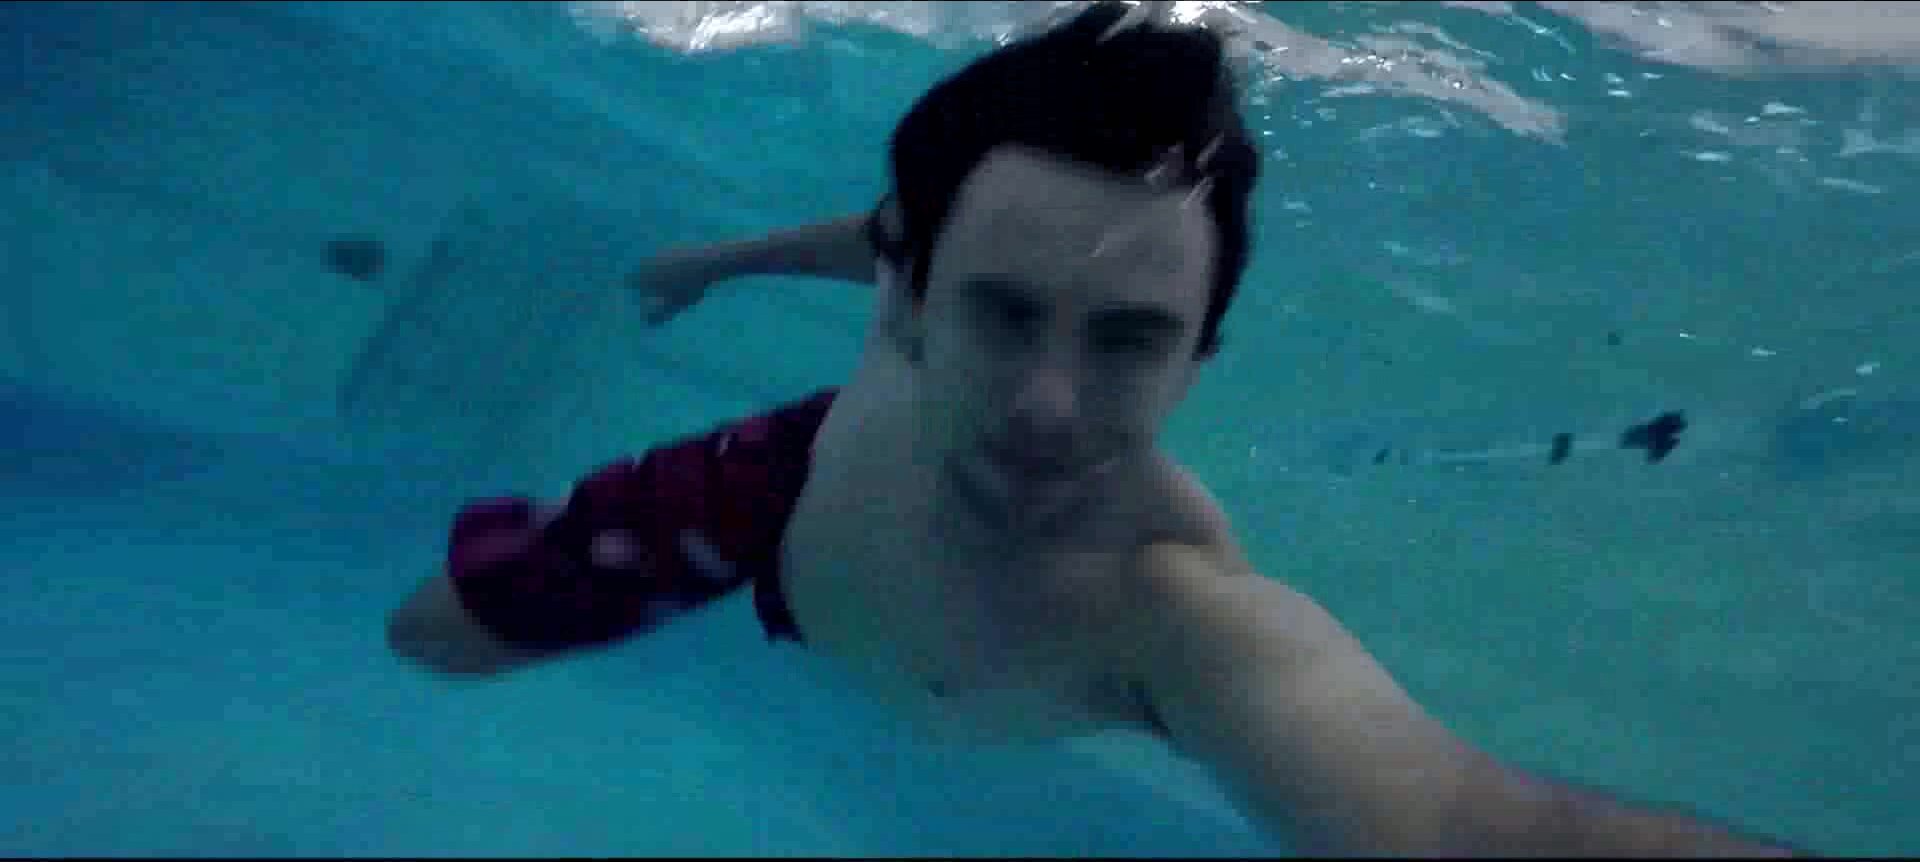 Long haired cutie underwater in pool